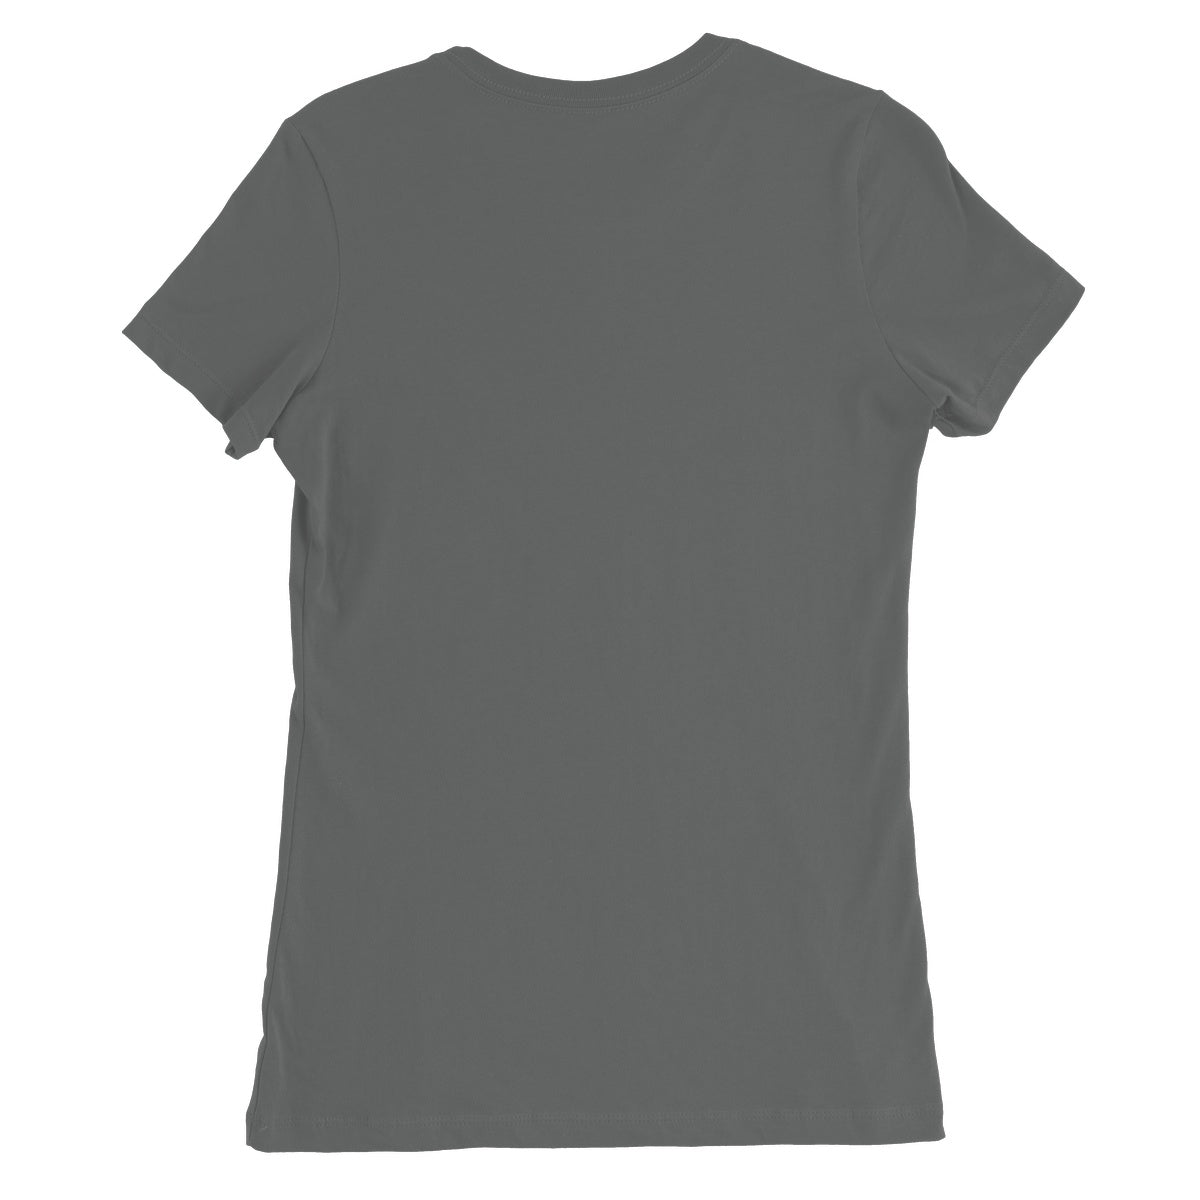 AQUA HMP2 - 01 - Barbarossa - Camiseta Feminina Fine Jersey